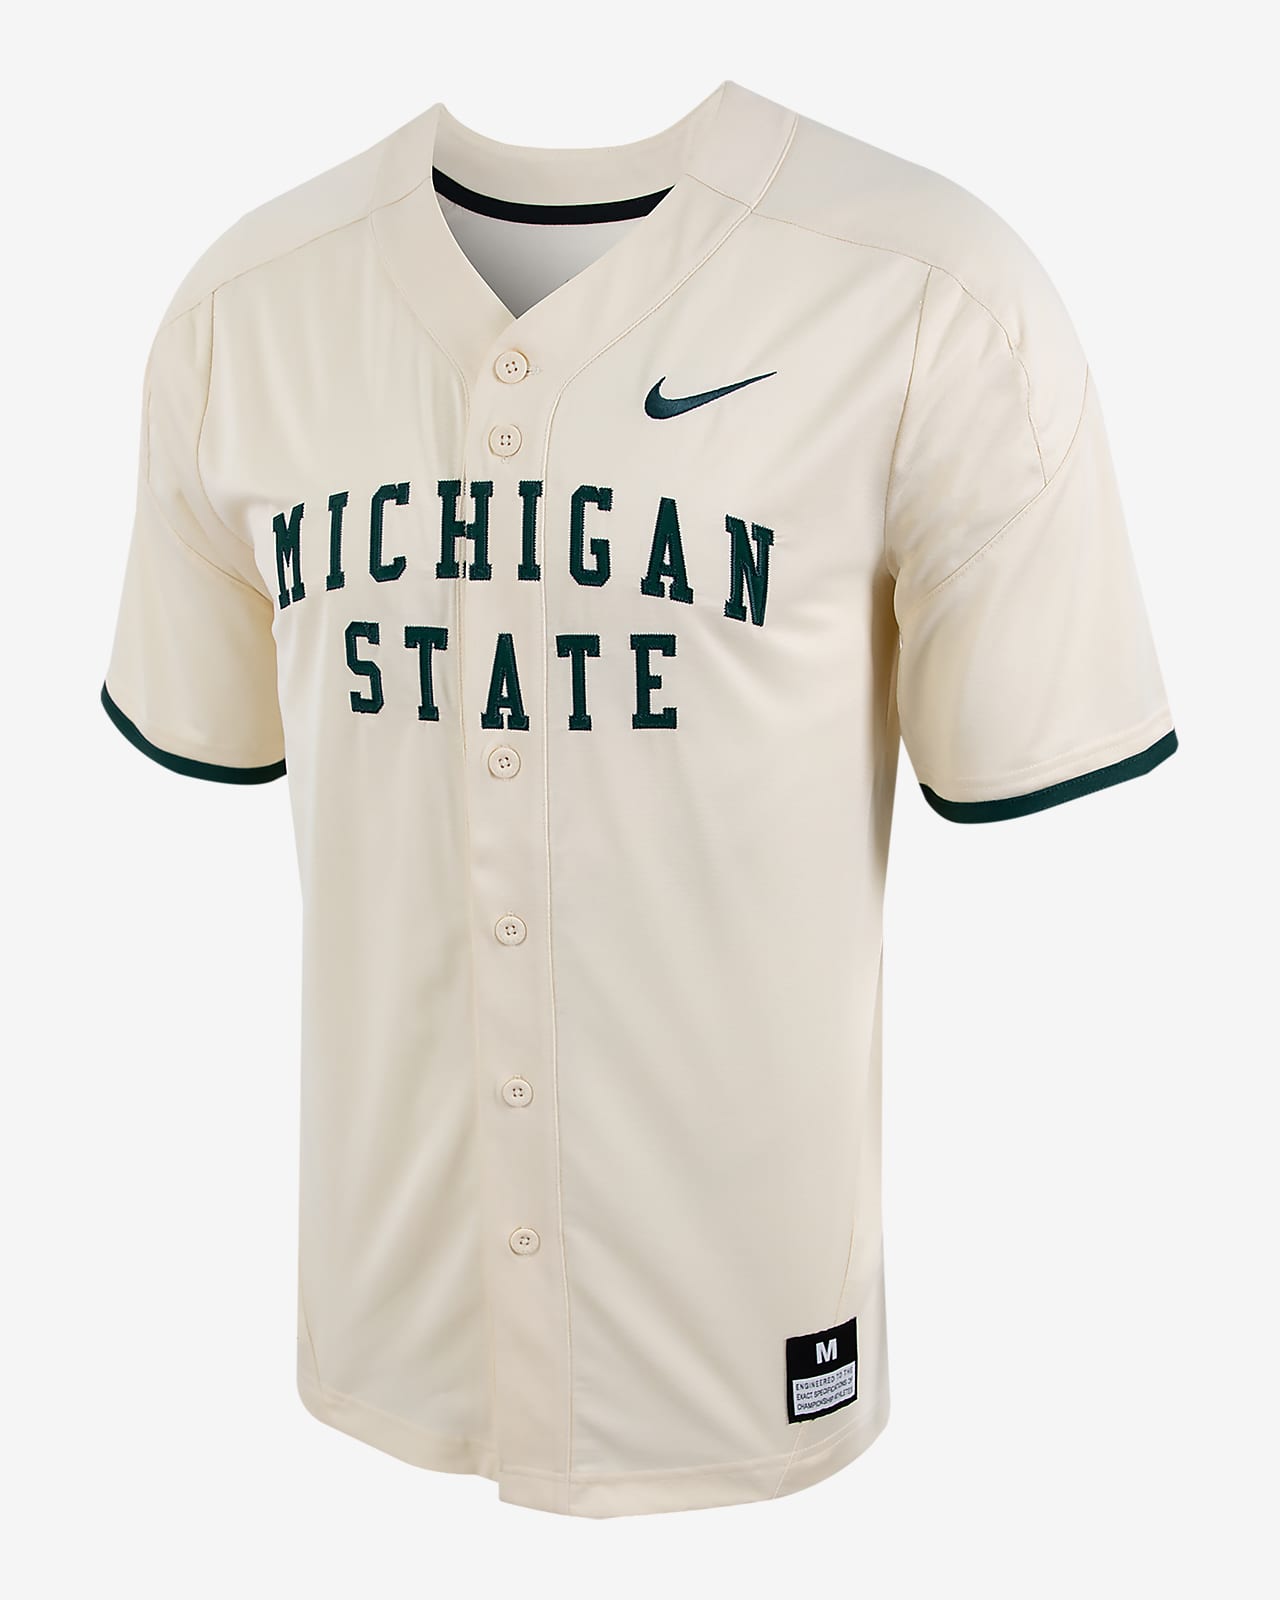 Michigan State Men's Nike College Full-Button Baseball Jersey